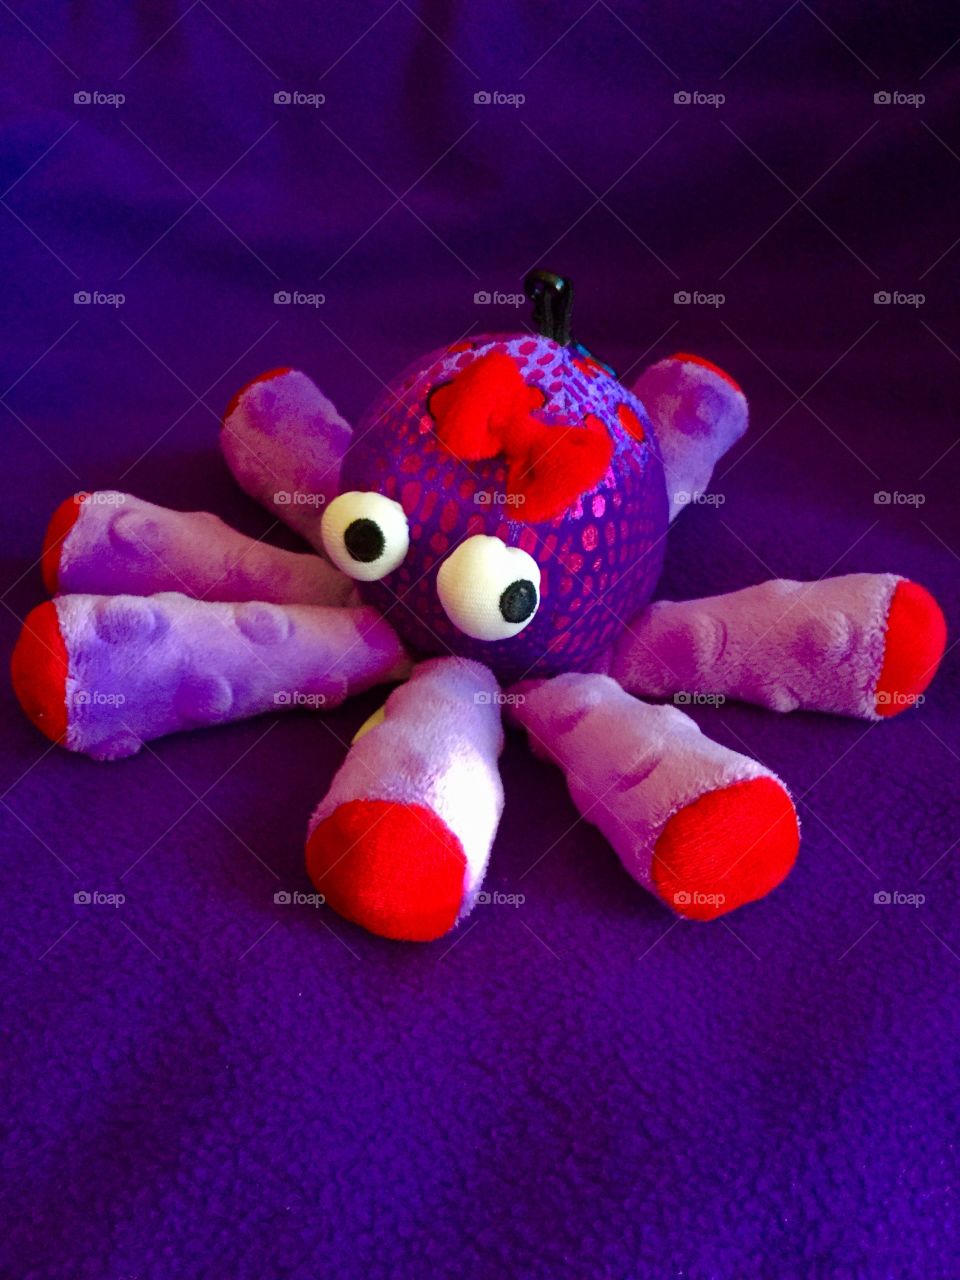 Purple Baby Octopus 